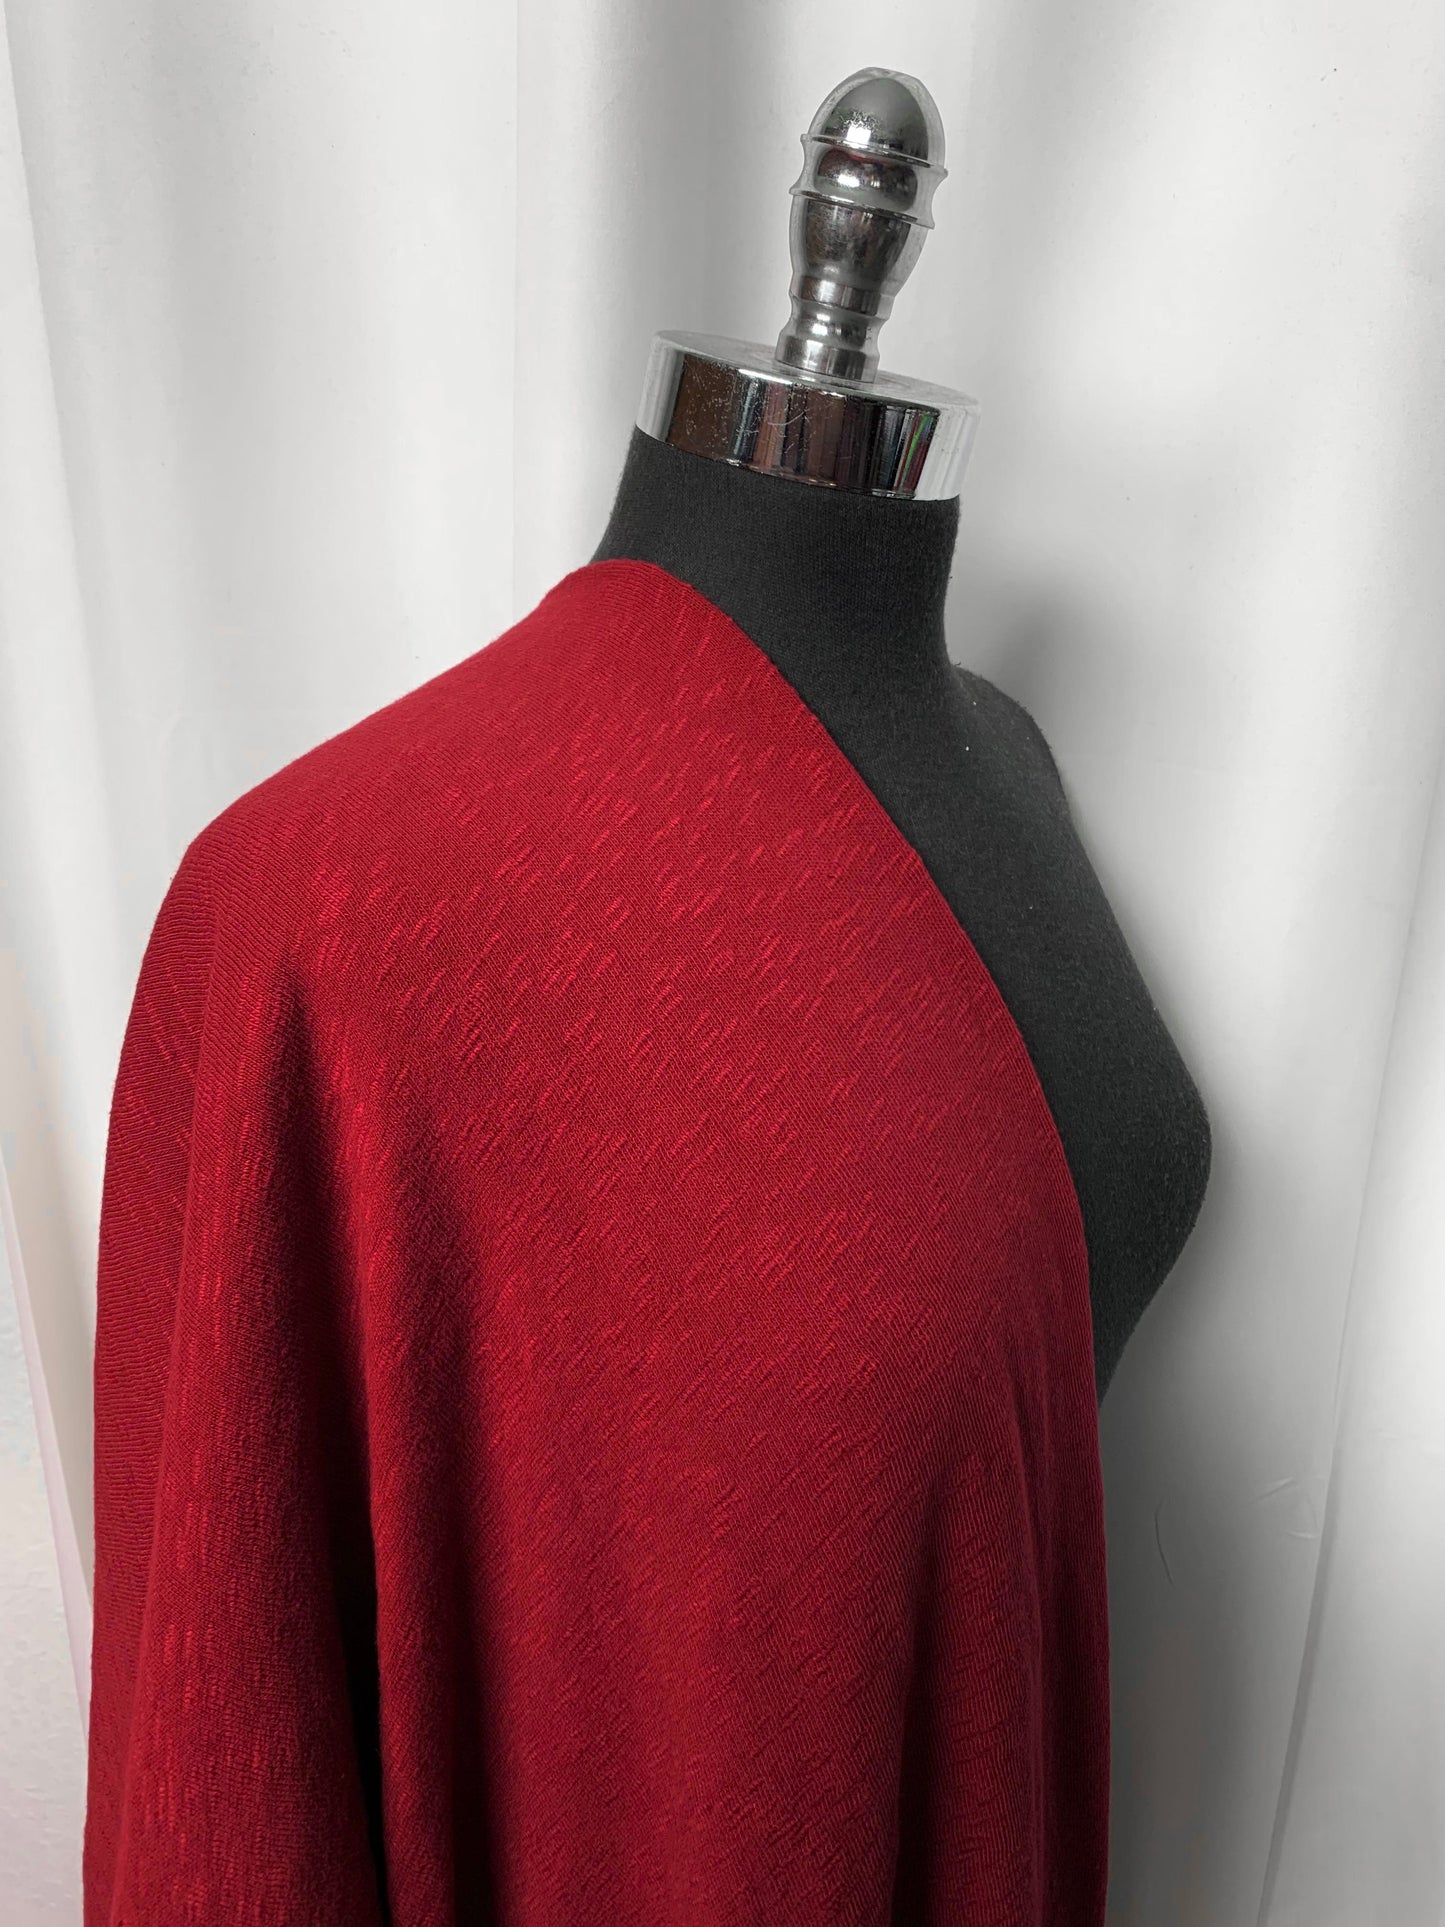 Cranberry - 100% Cotton Heavy Slub Sweater Knit - 2 Yard Cut